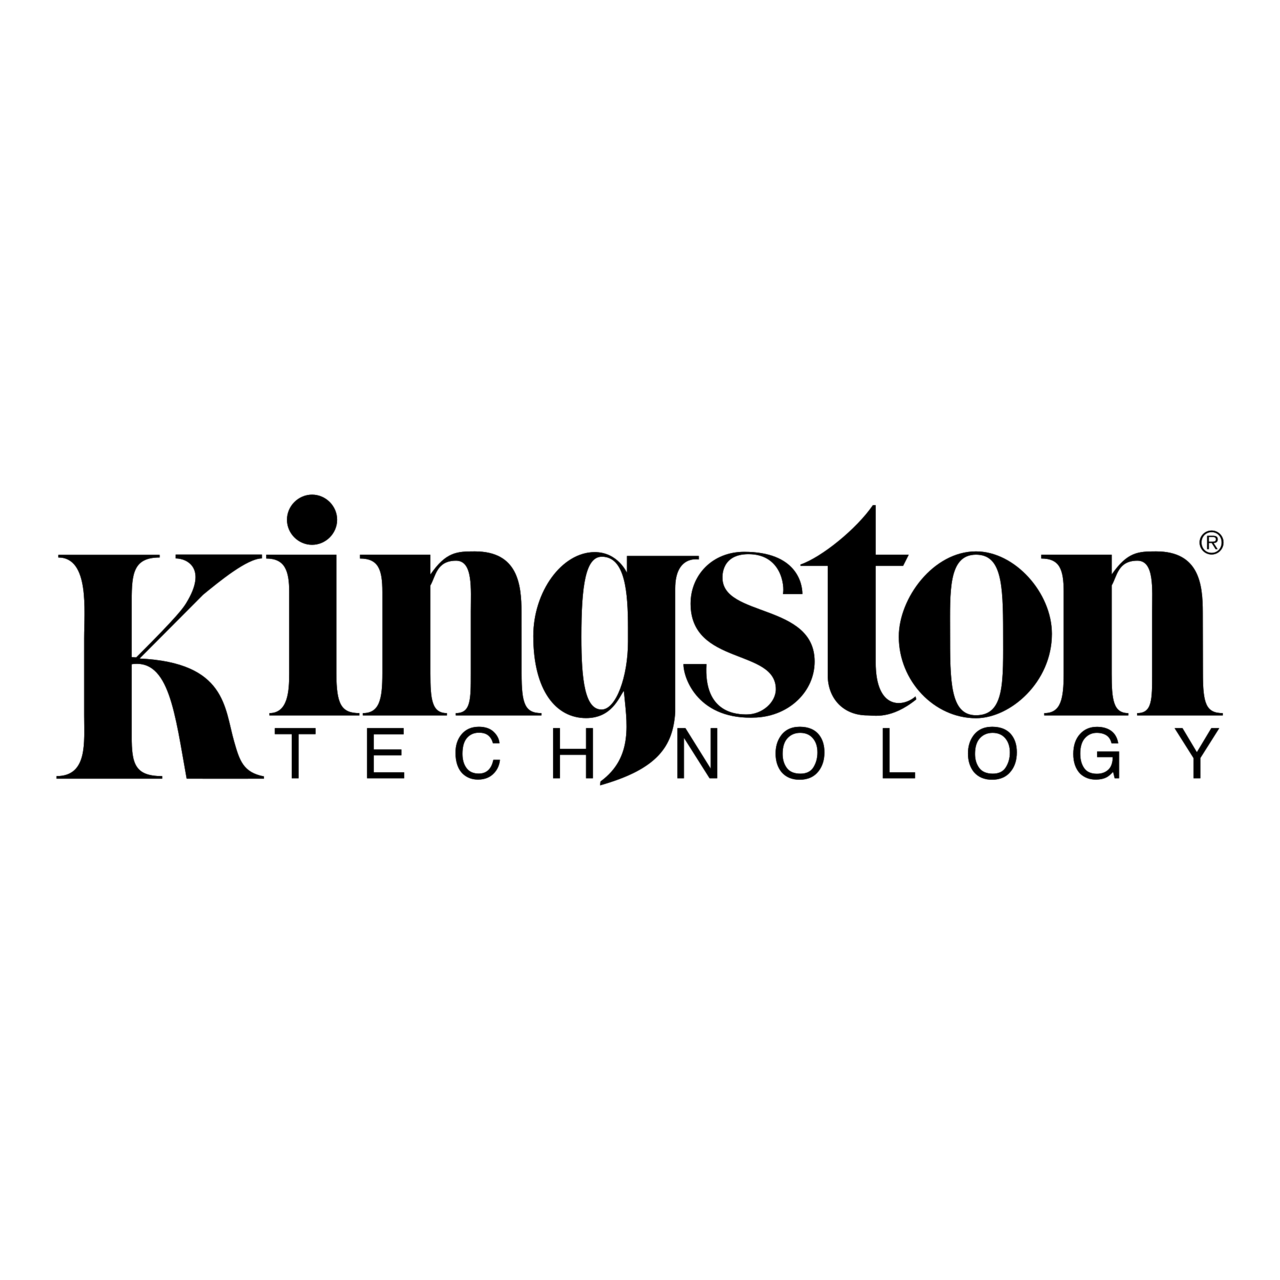 kingston-logo-black-and-white-1